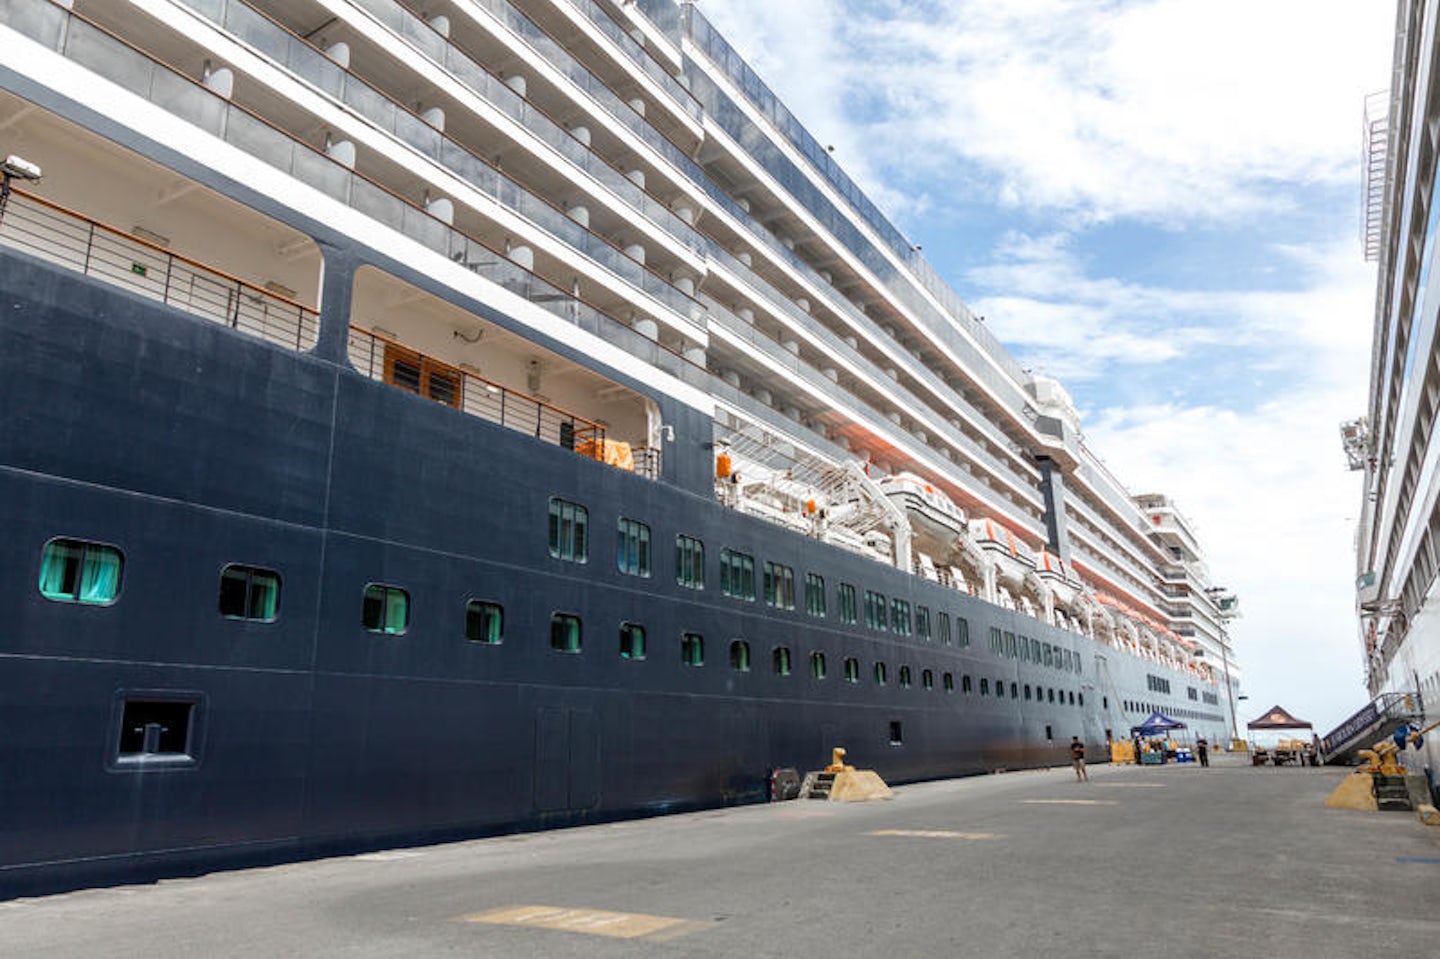 Puerto Limon Cruise Port